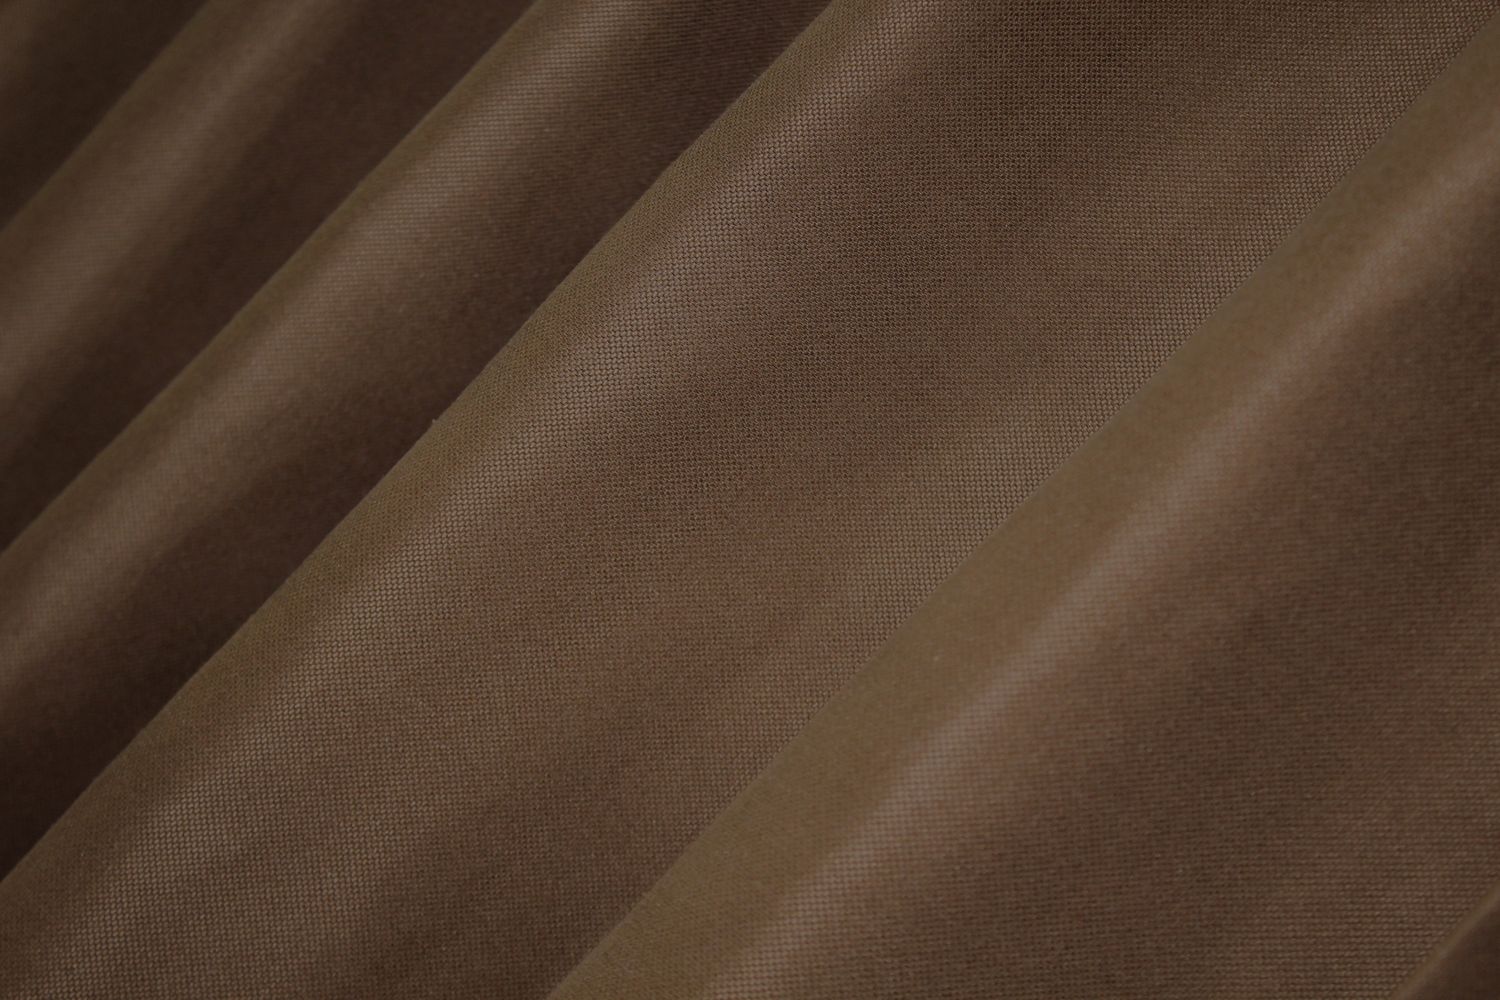 Комплект штор из ткани микровелюр Petek цвет коричневый 789ш, Коричневый, Комплект коротких штор (2 шт. 1,3х1,7м.), Классические, Короткие, 1,3 м., 1,7 м., 130, 170, 2 - 3 м., В комплекте 2 шт., Тесьма